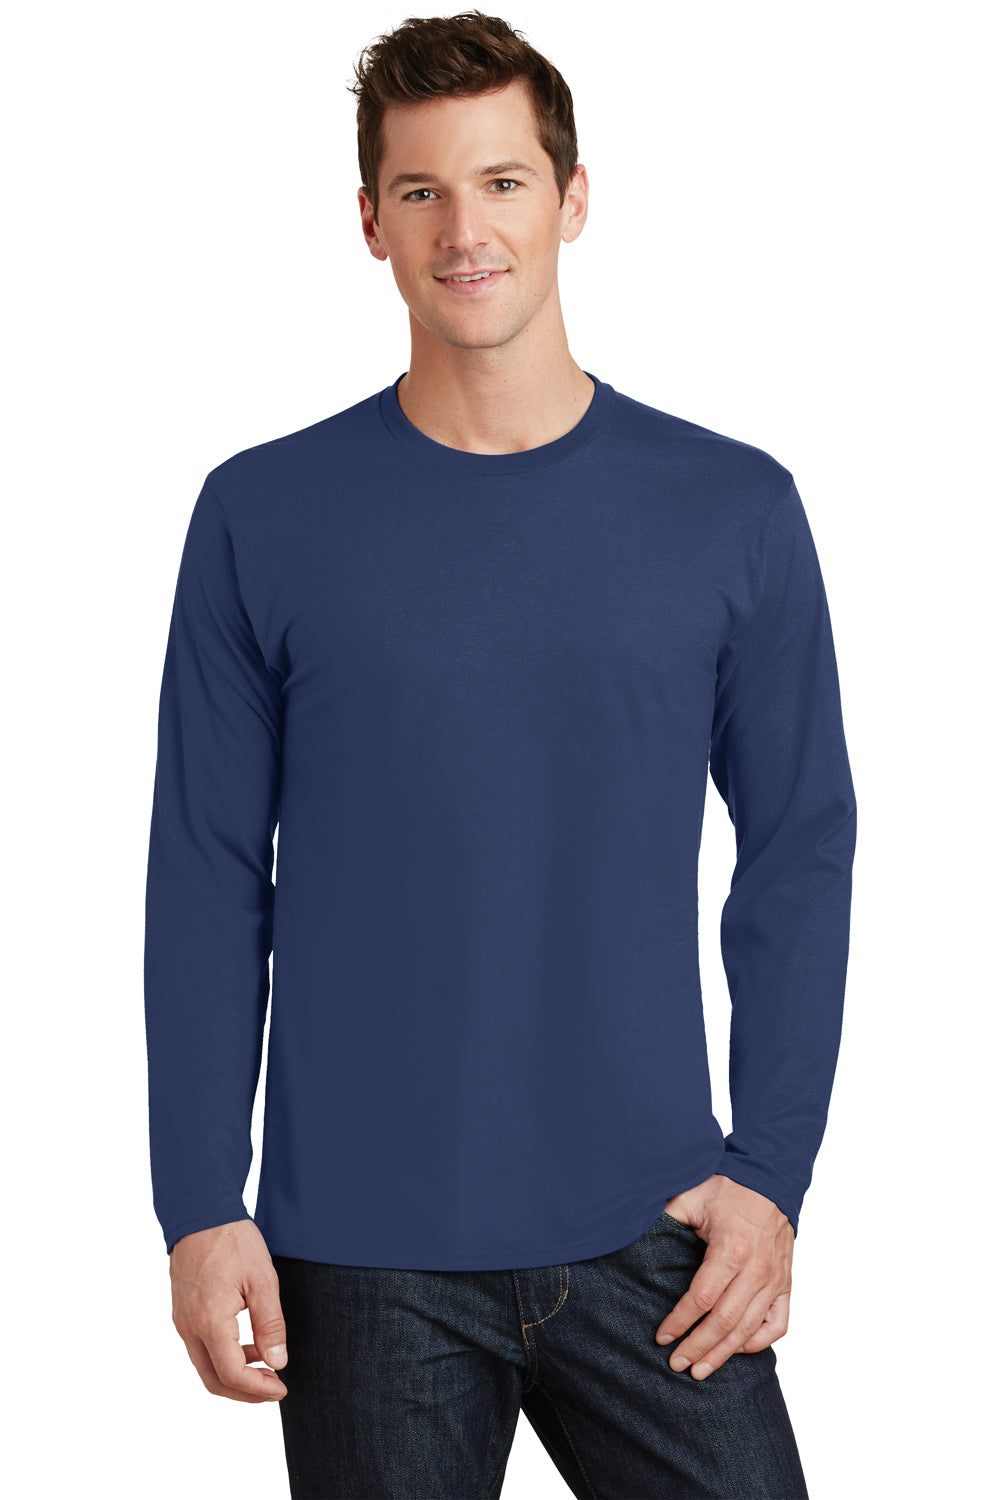 Port & Company PC450LS Mens Fan Favorite Long Sleeve Crewneck T-Shirt Navy Blue Front